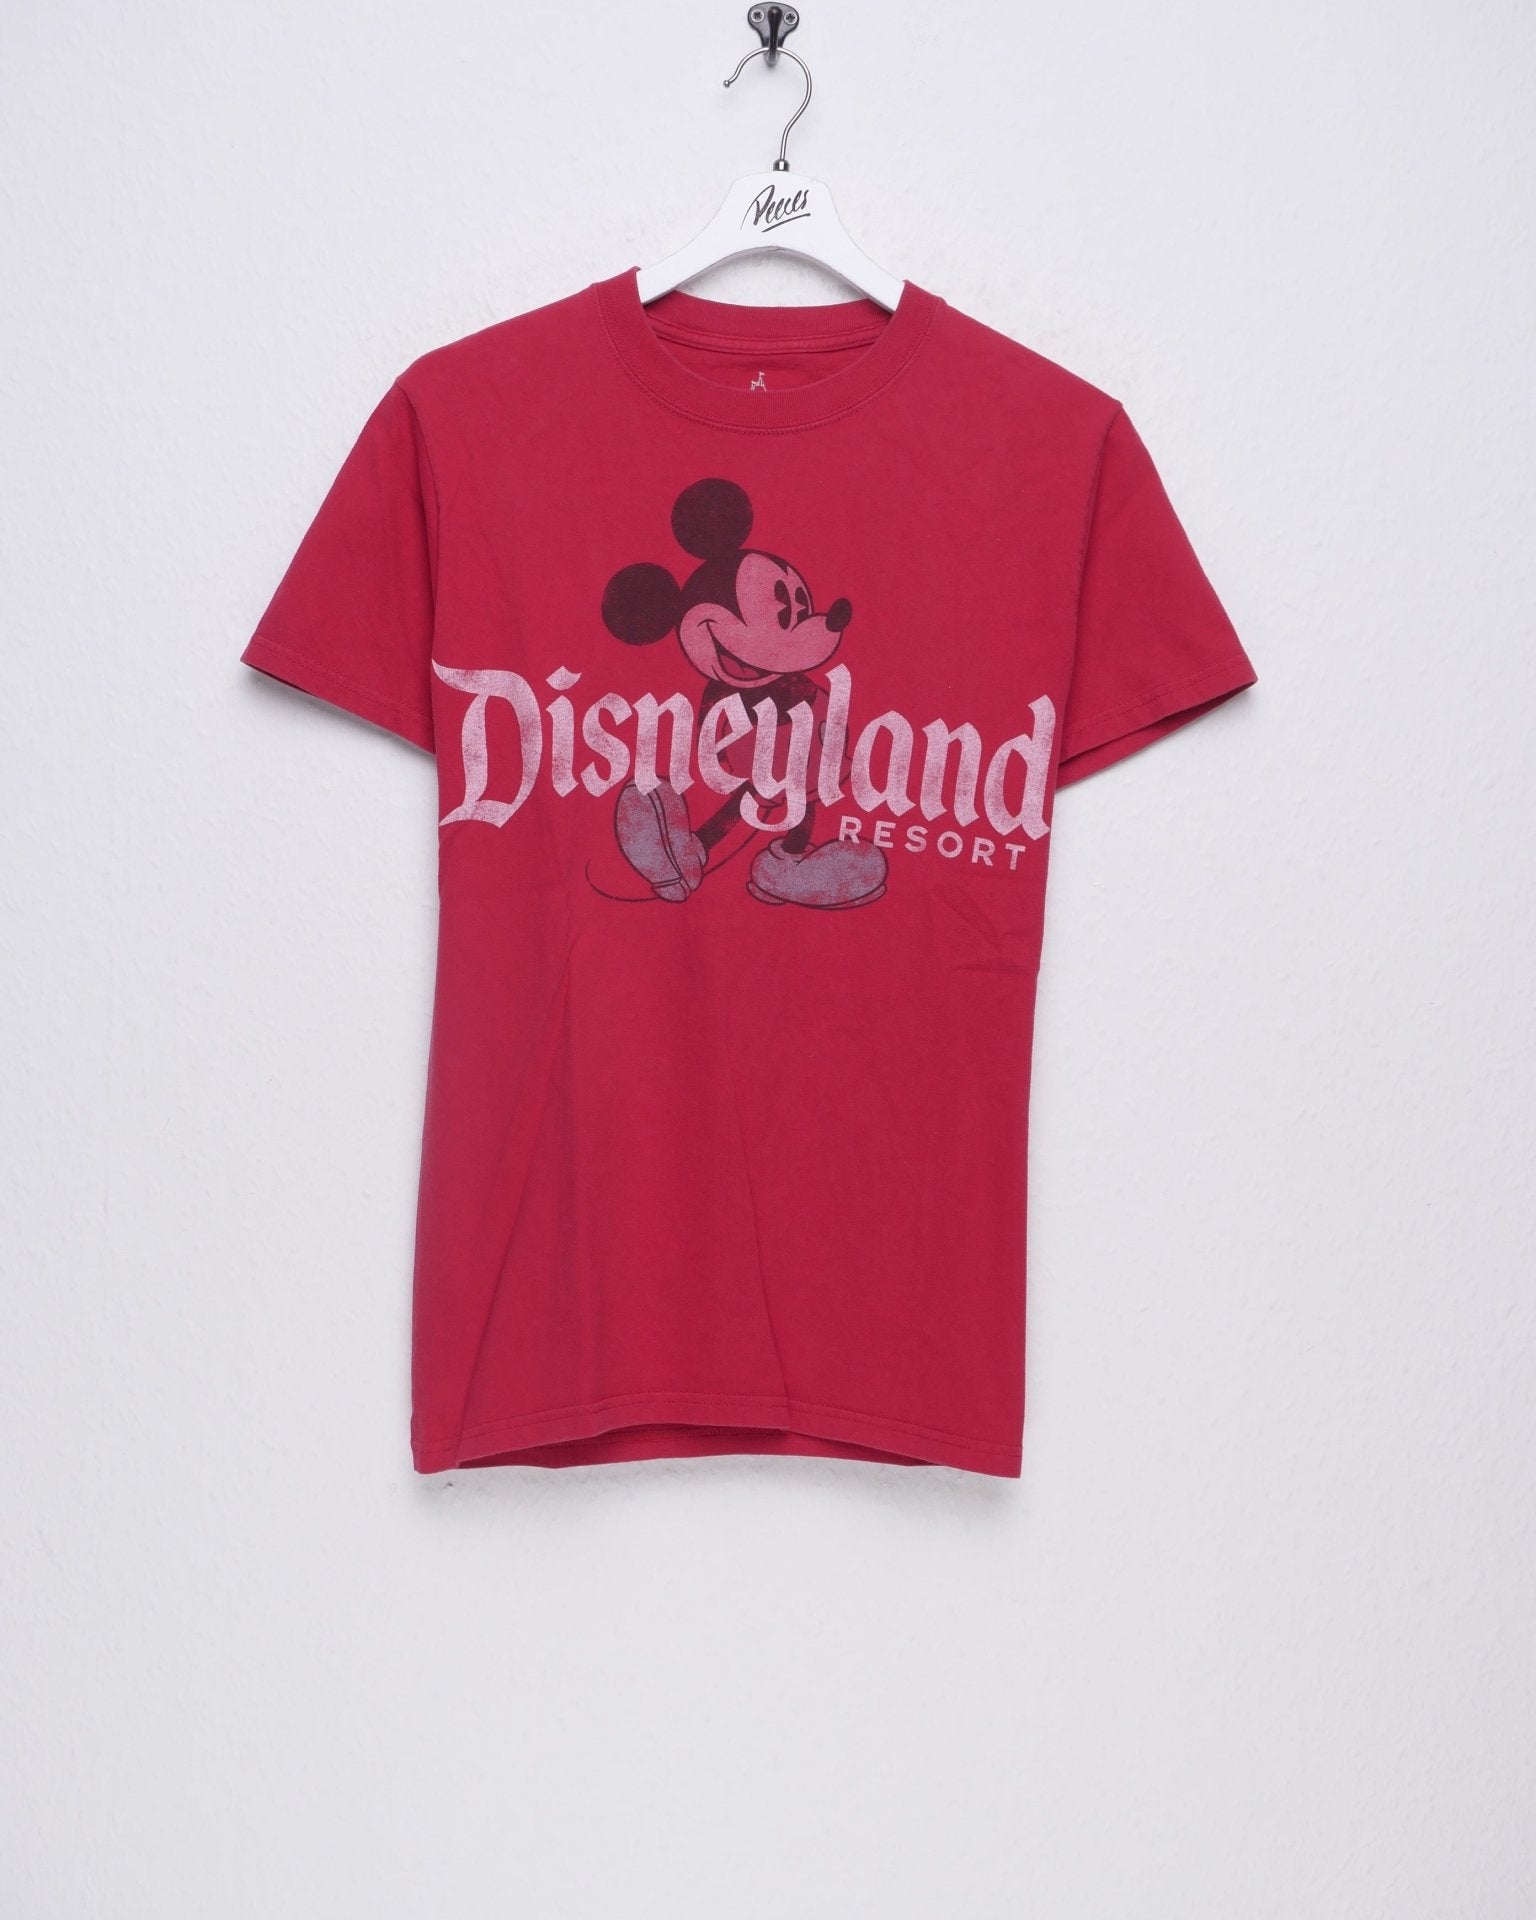 Disney printed Spellout Vintage Shirt - Peeces